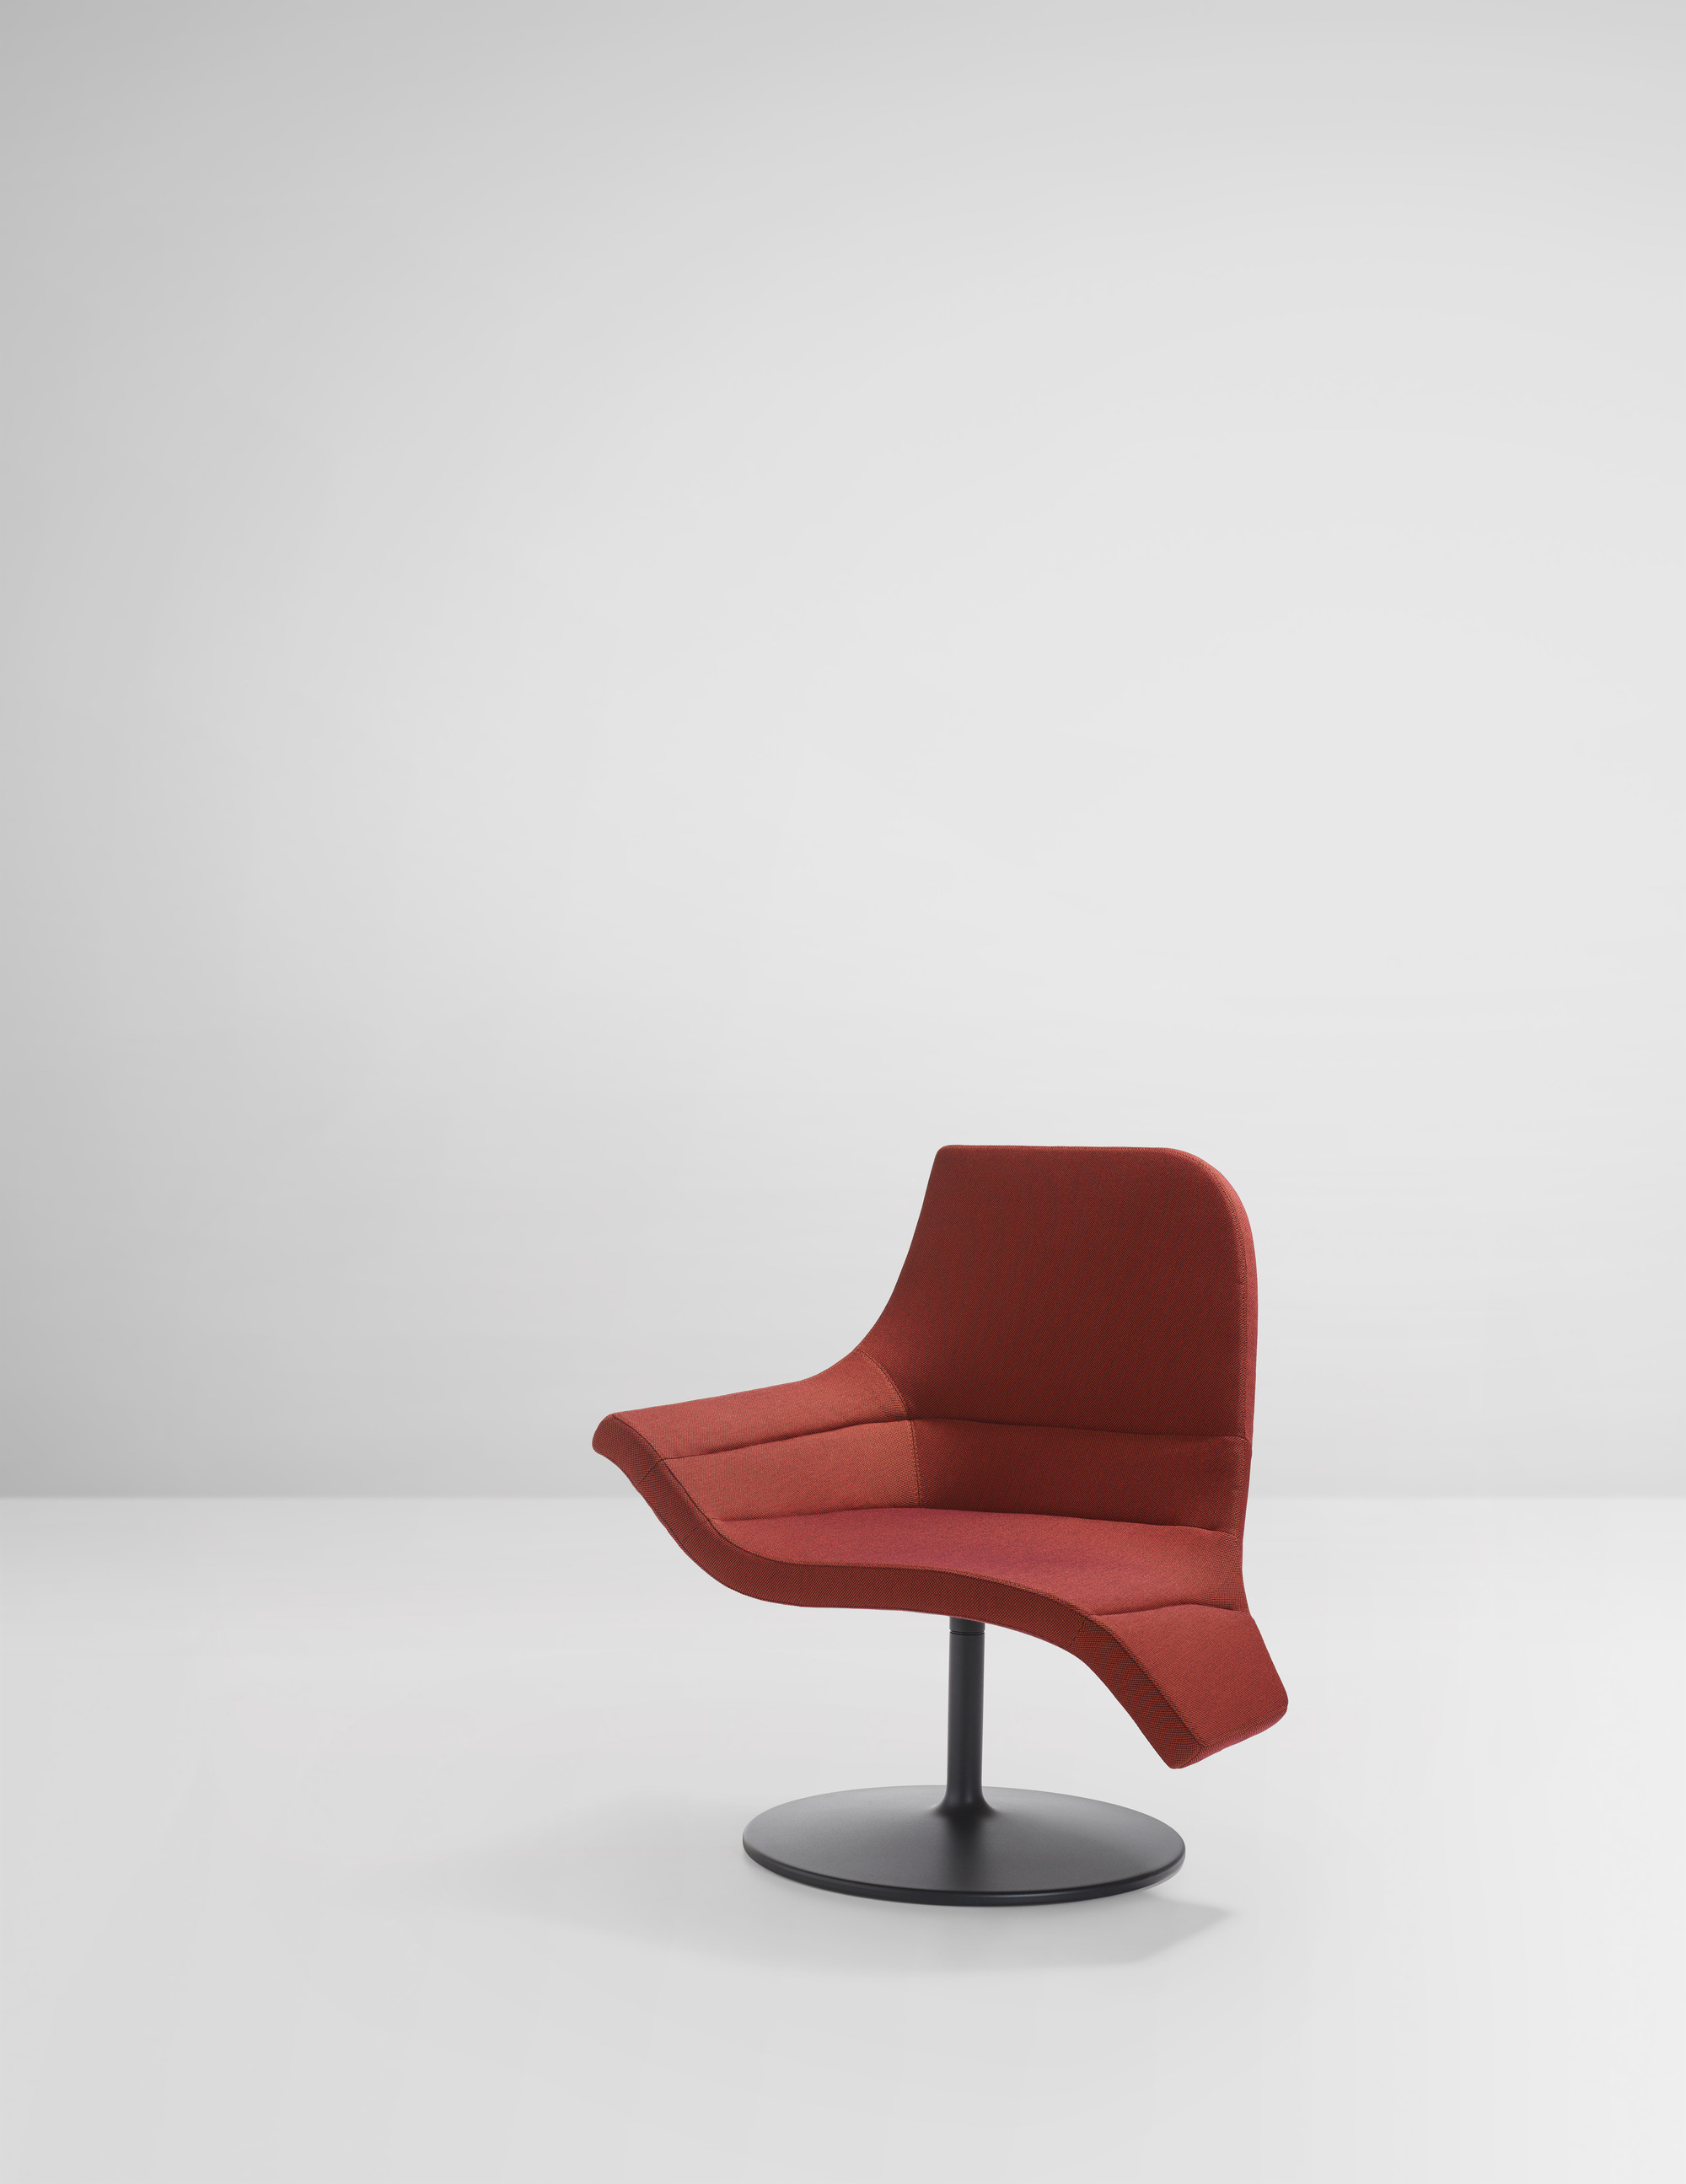 Gemini Swivel Chair revealed at Salone del Mobile